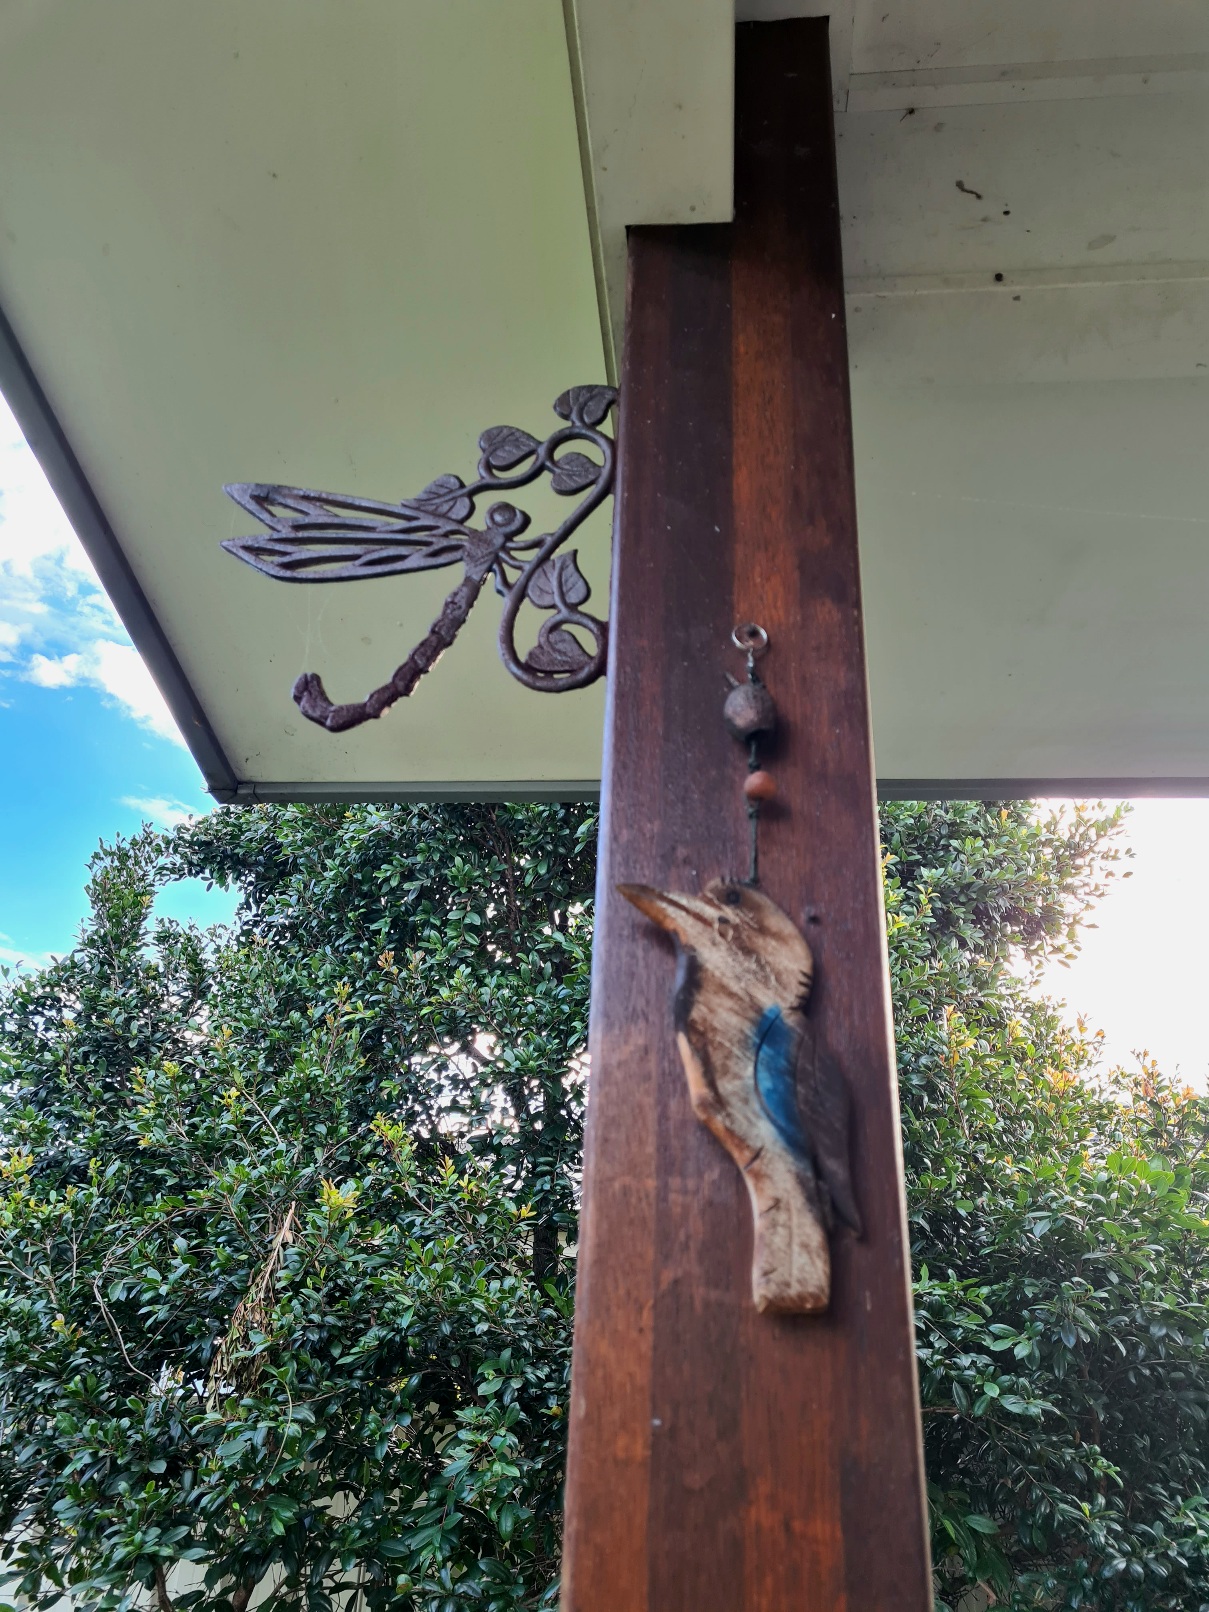 Dragonfly and kookaburra outdoor ornaments